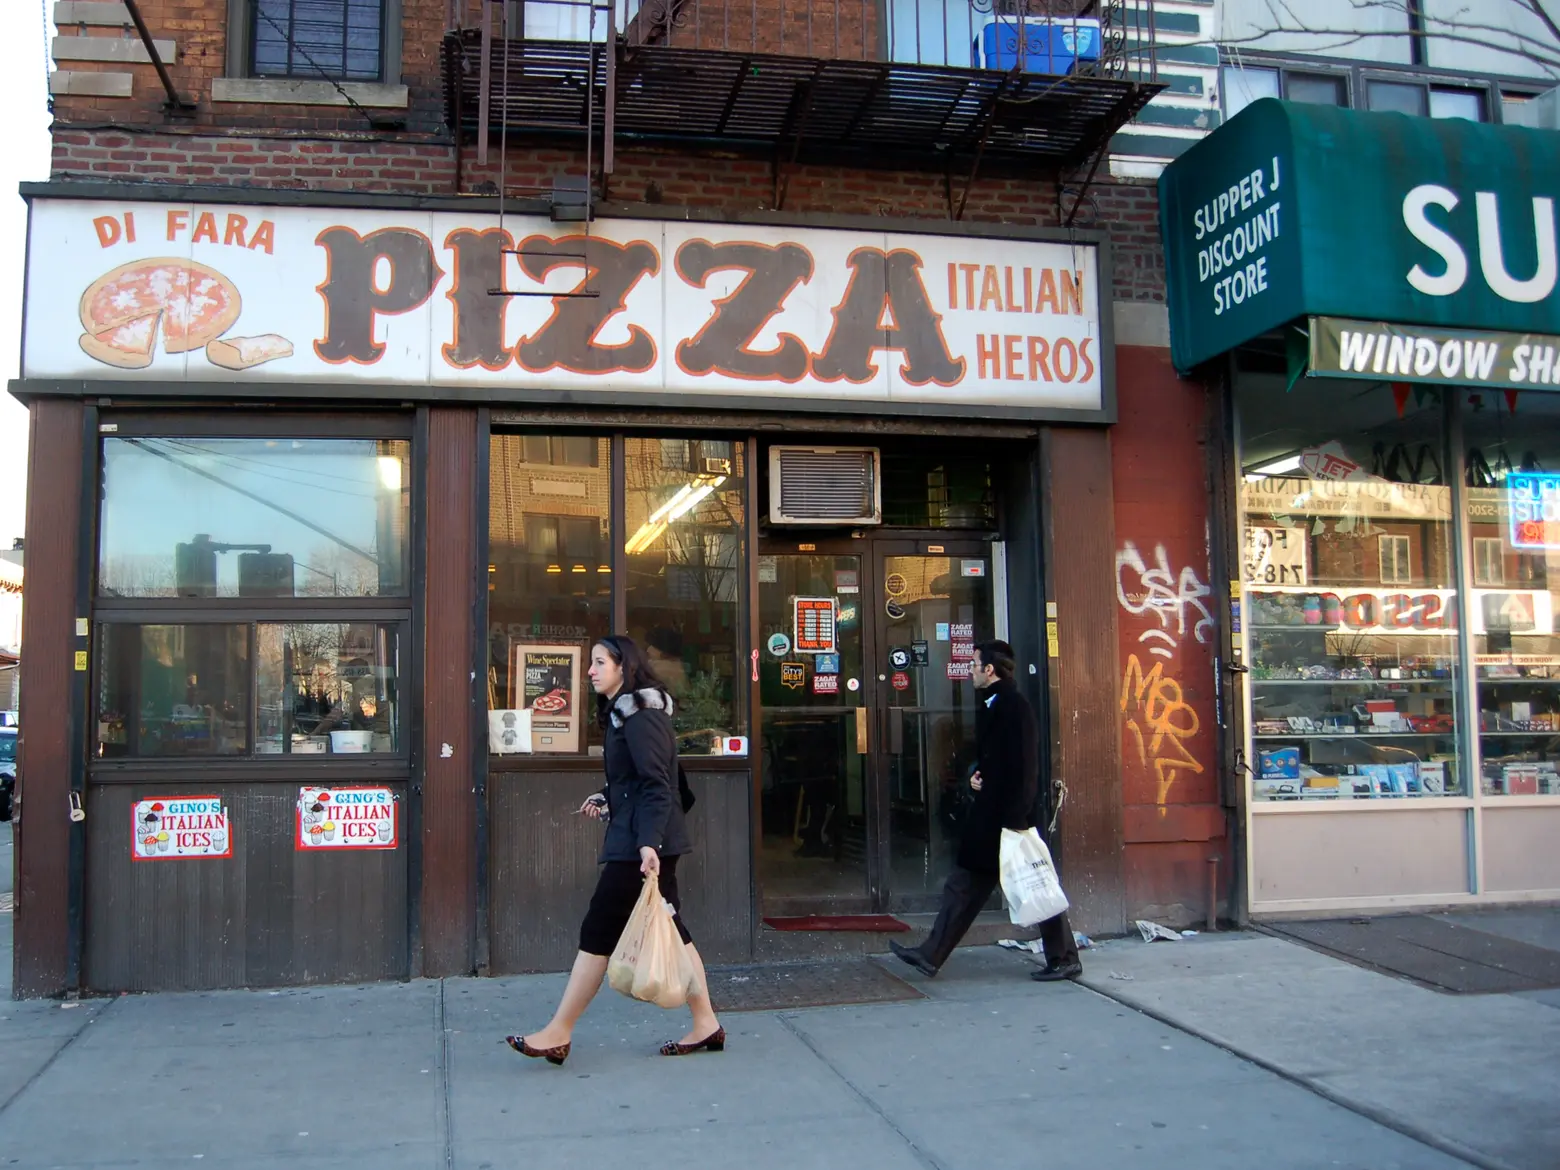 De Blasio vows to save legendary Di Fara Pizza after tax seizure